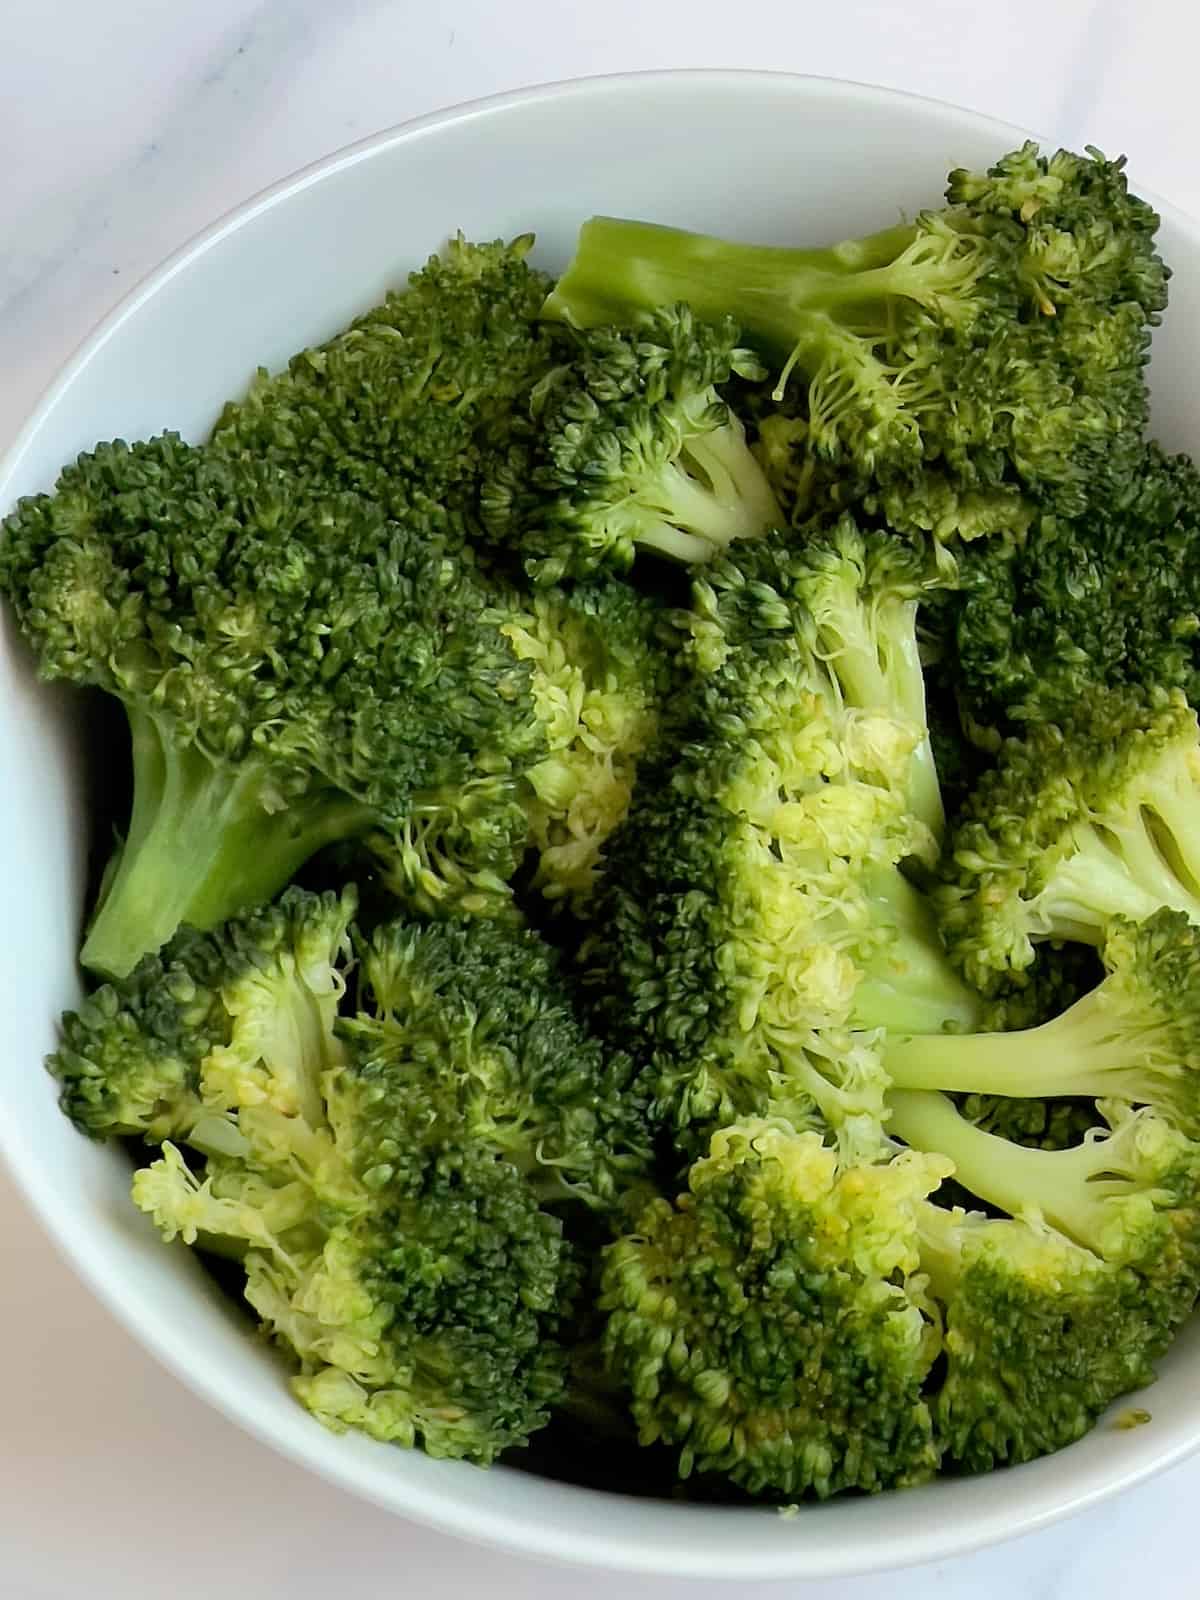 Instant pot broccoli in a white plate